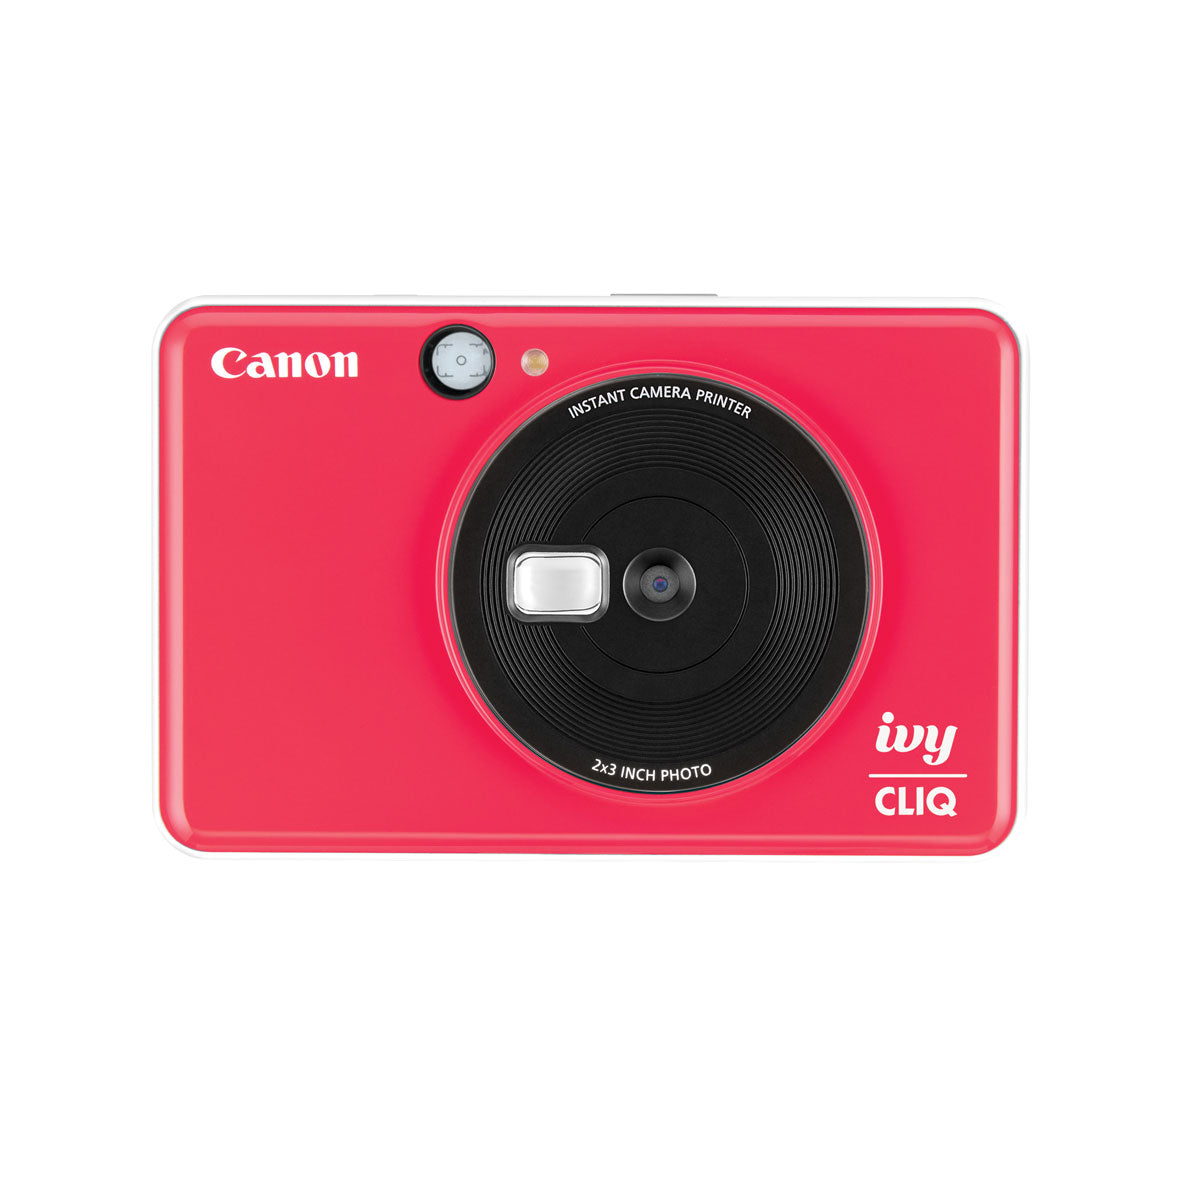 Canon IVY Cliq Instant Camera Printer (Ladybug Red)